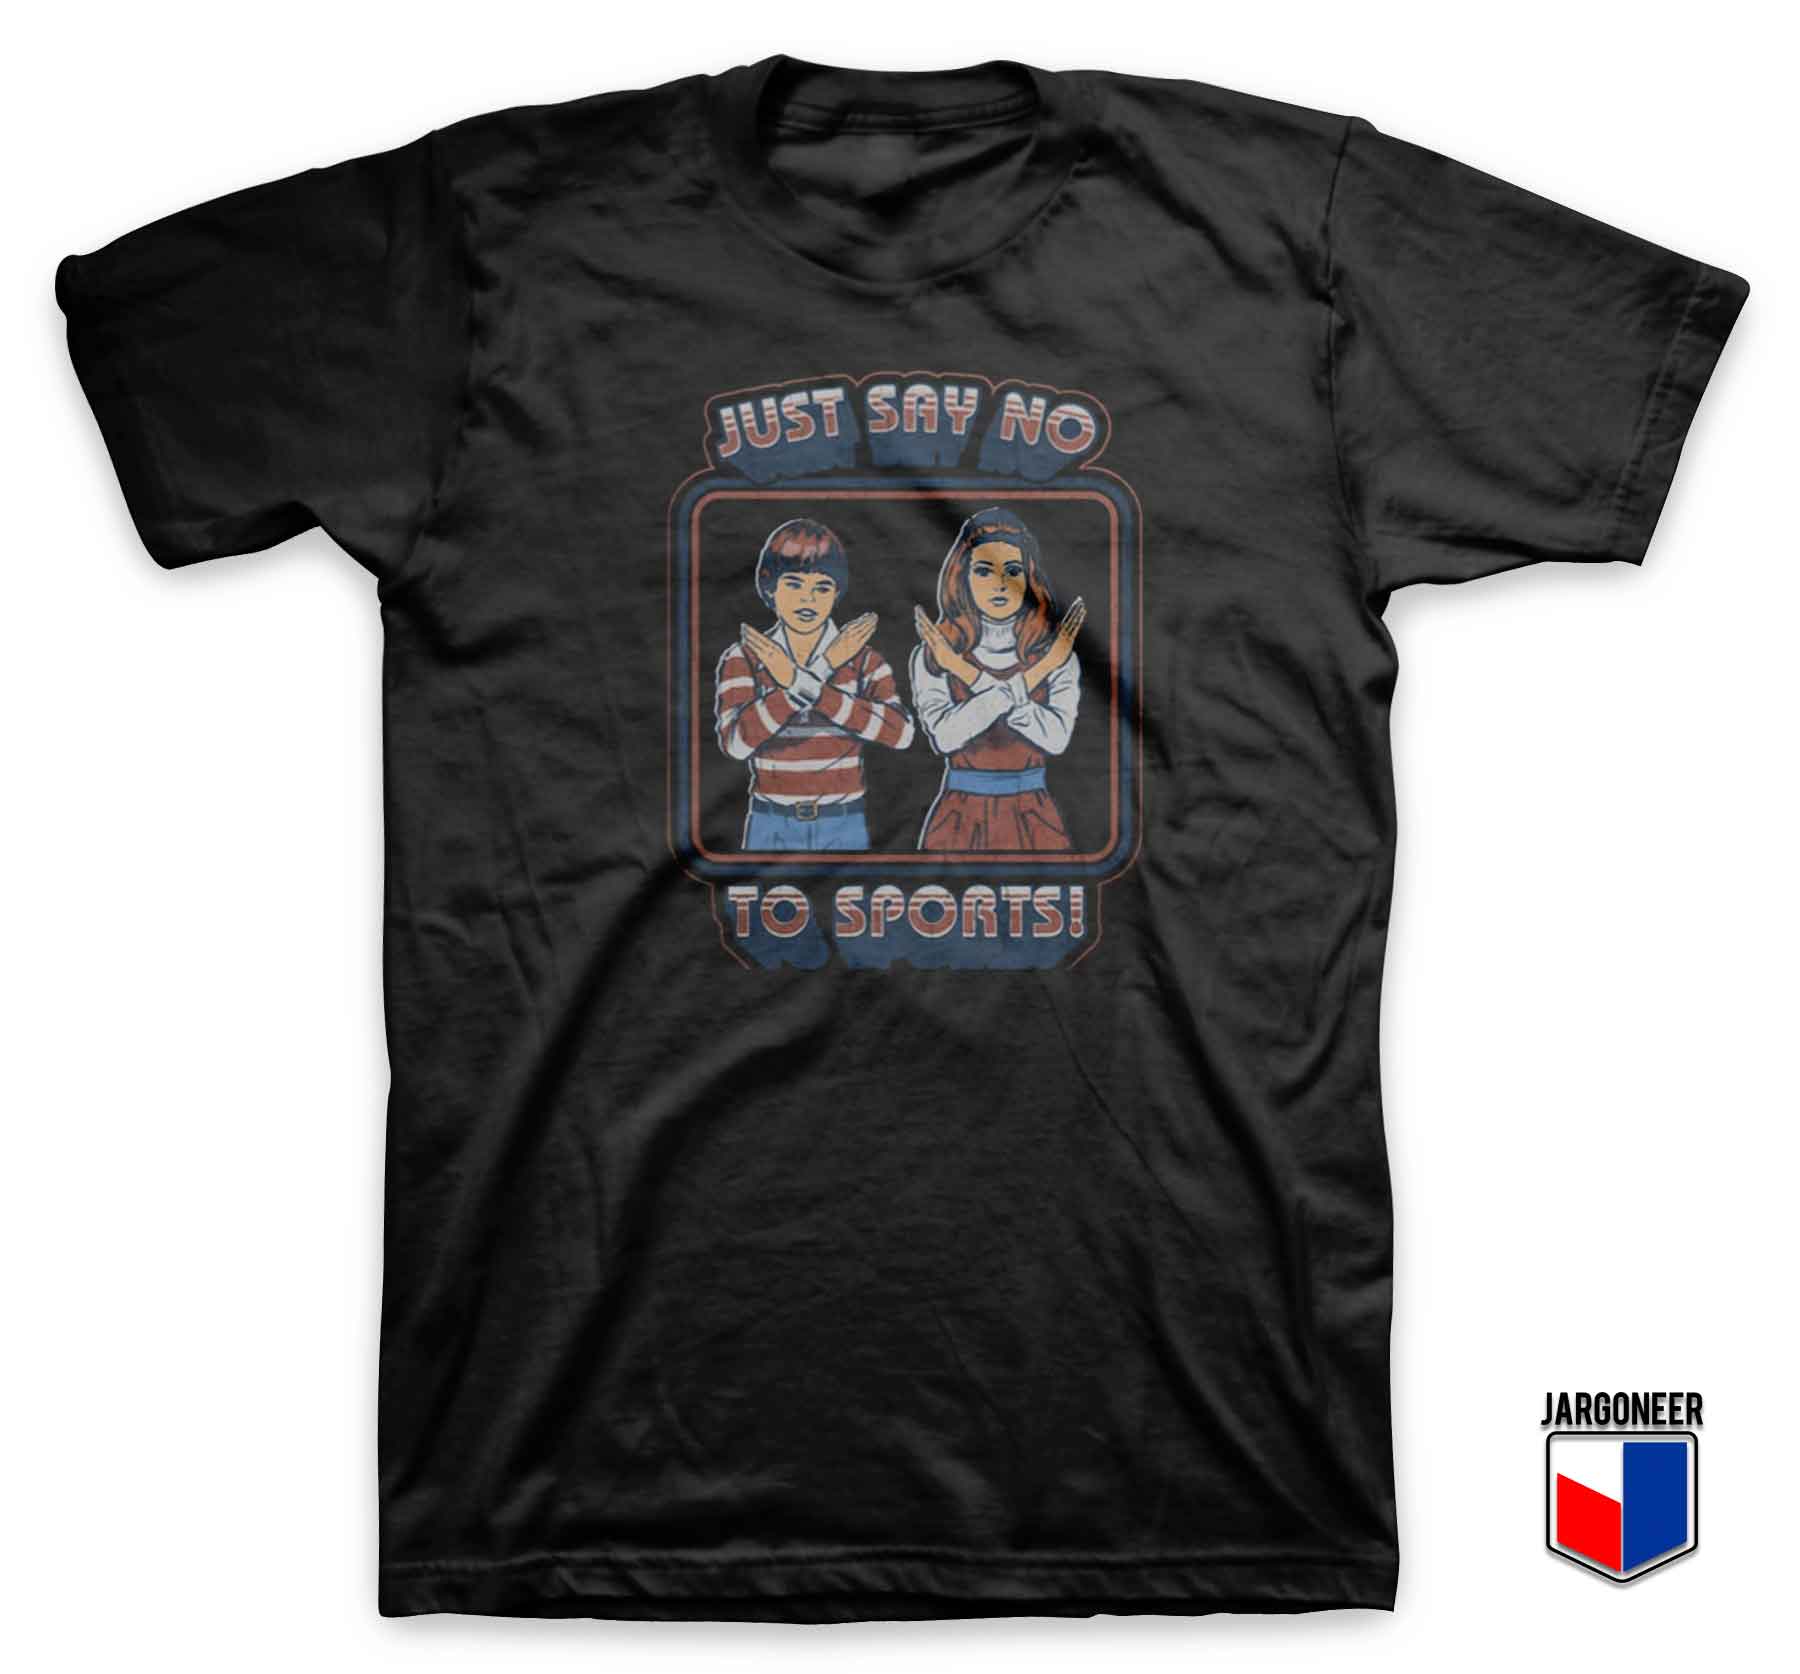 Say No To Sports - Shop Unique Graphic Cool Shirt Designs